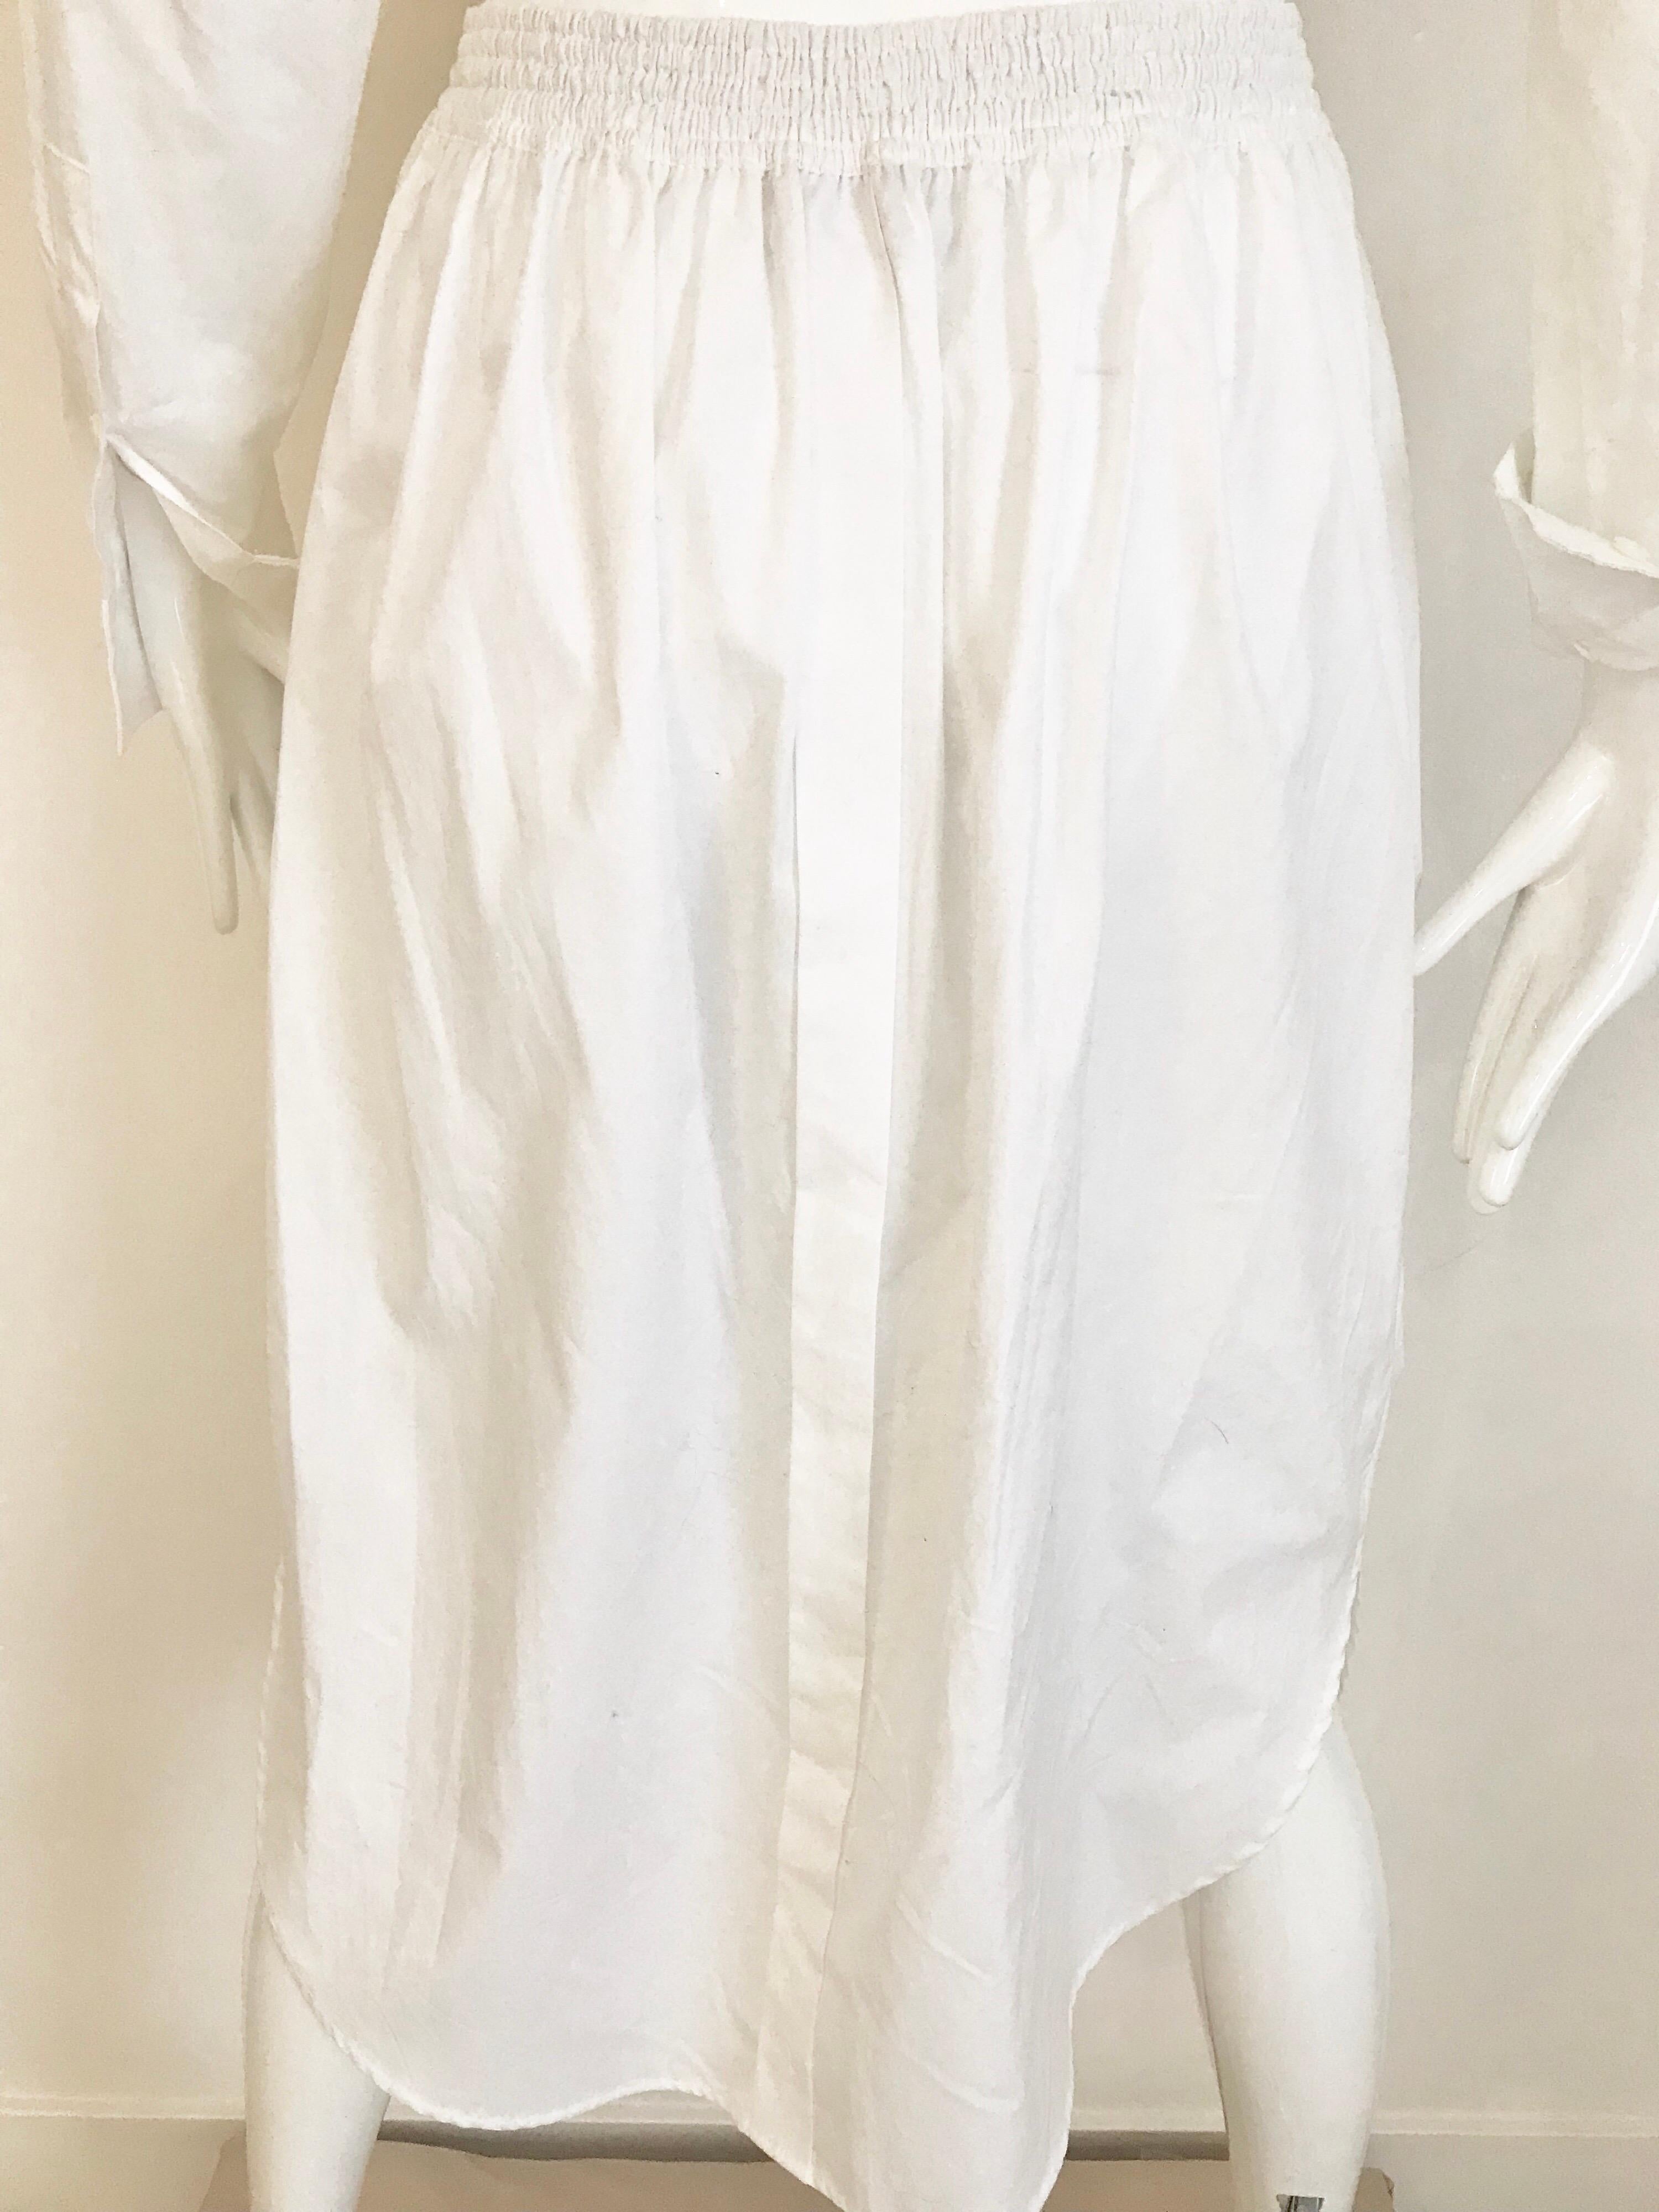 Jean Paul Gaultier White Cotton Crop Top and Skirt (Grau)